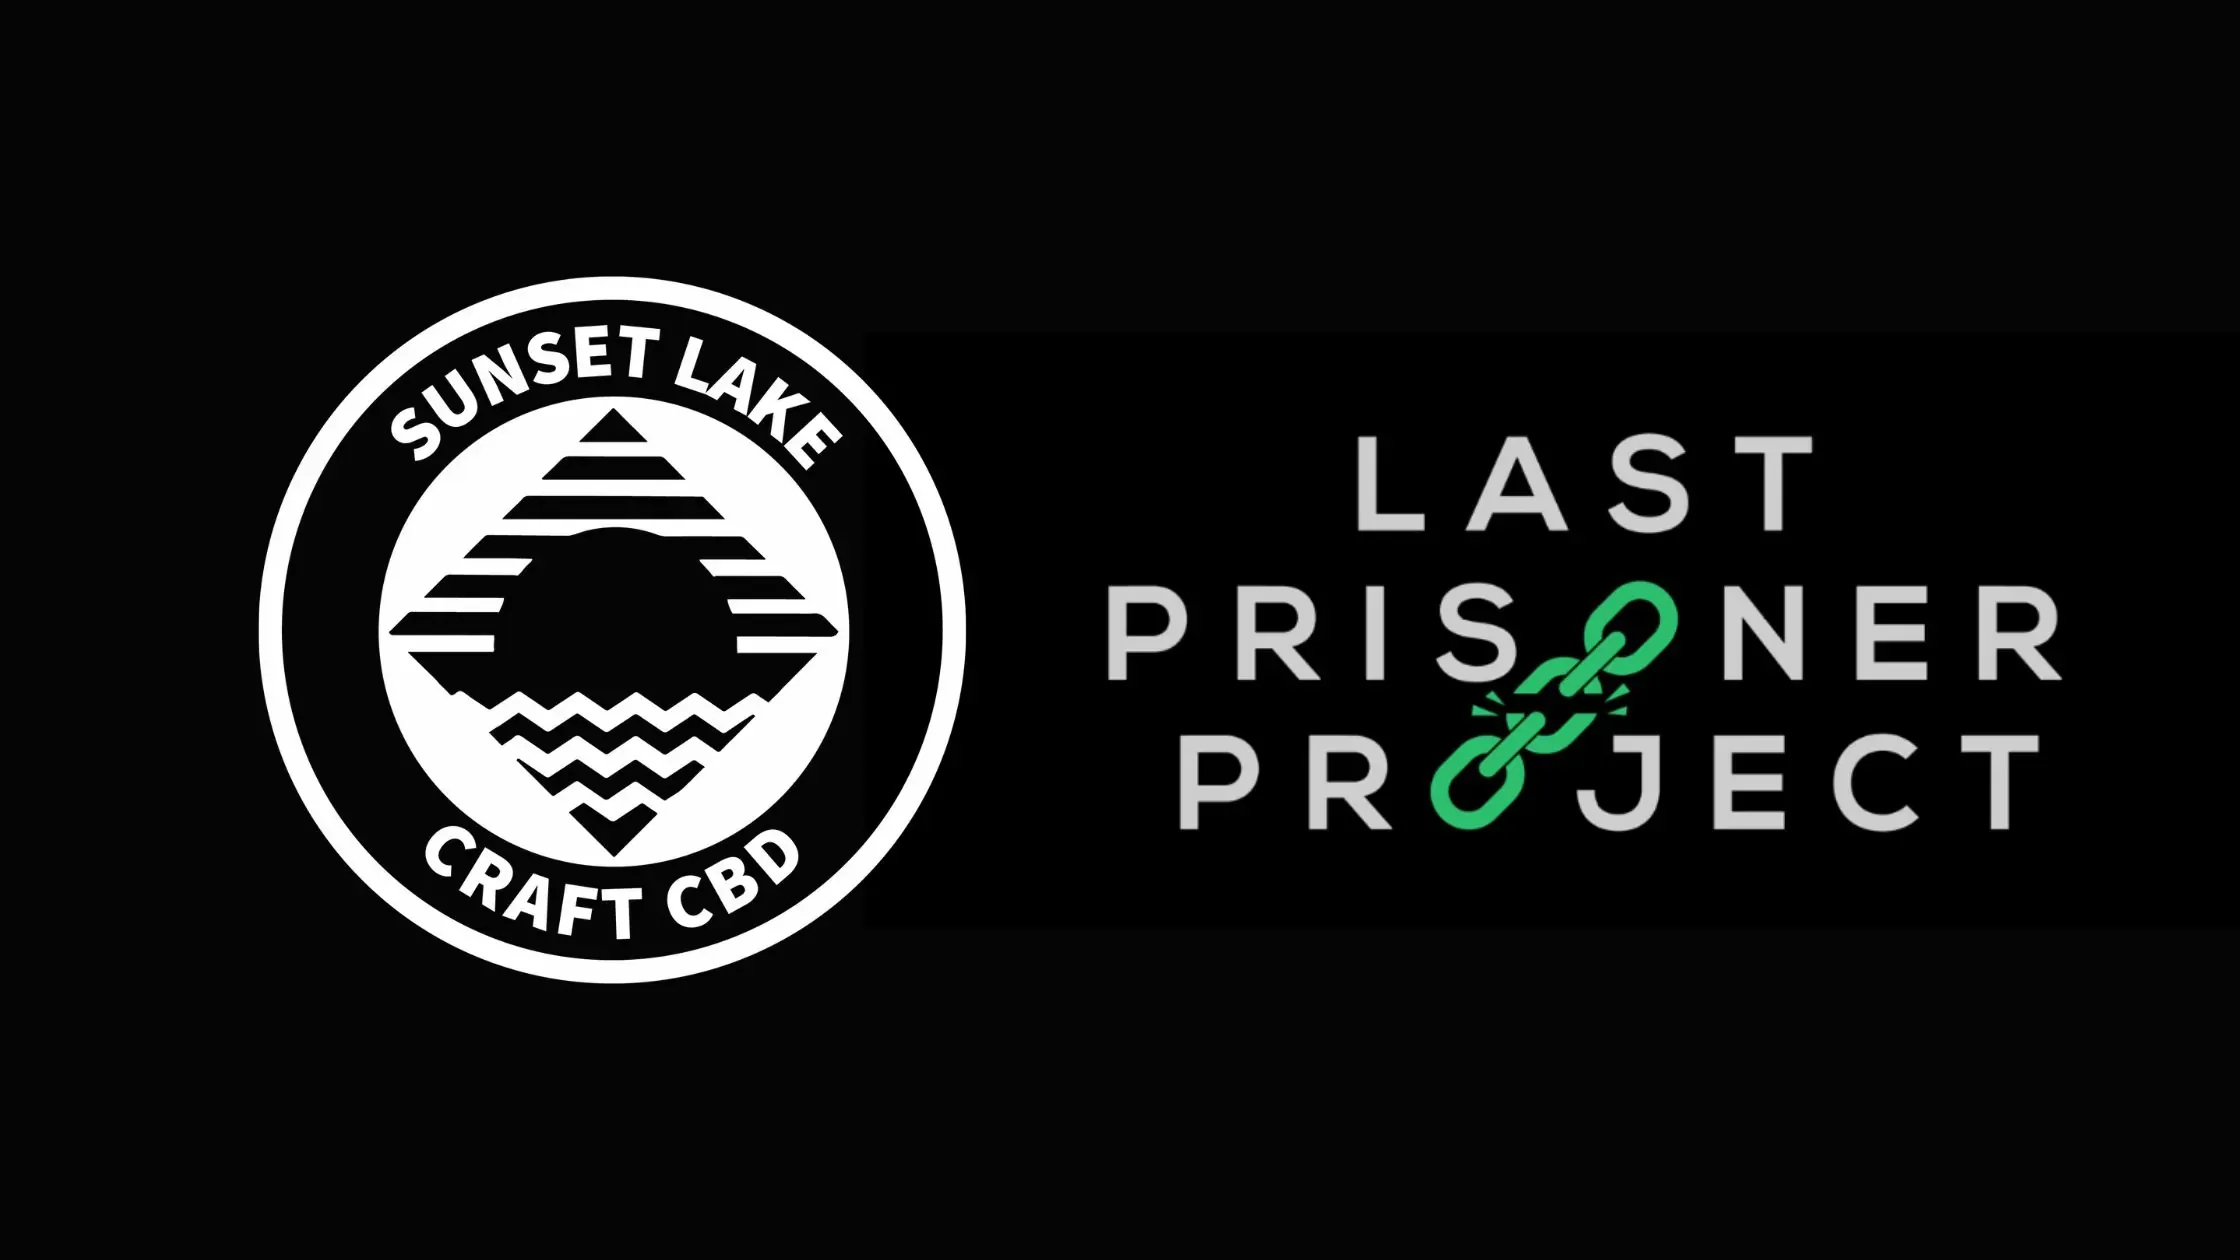 Sunset Lake CBD logo next to the Last Prisoner Project logo